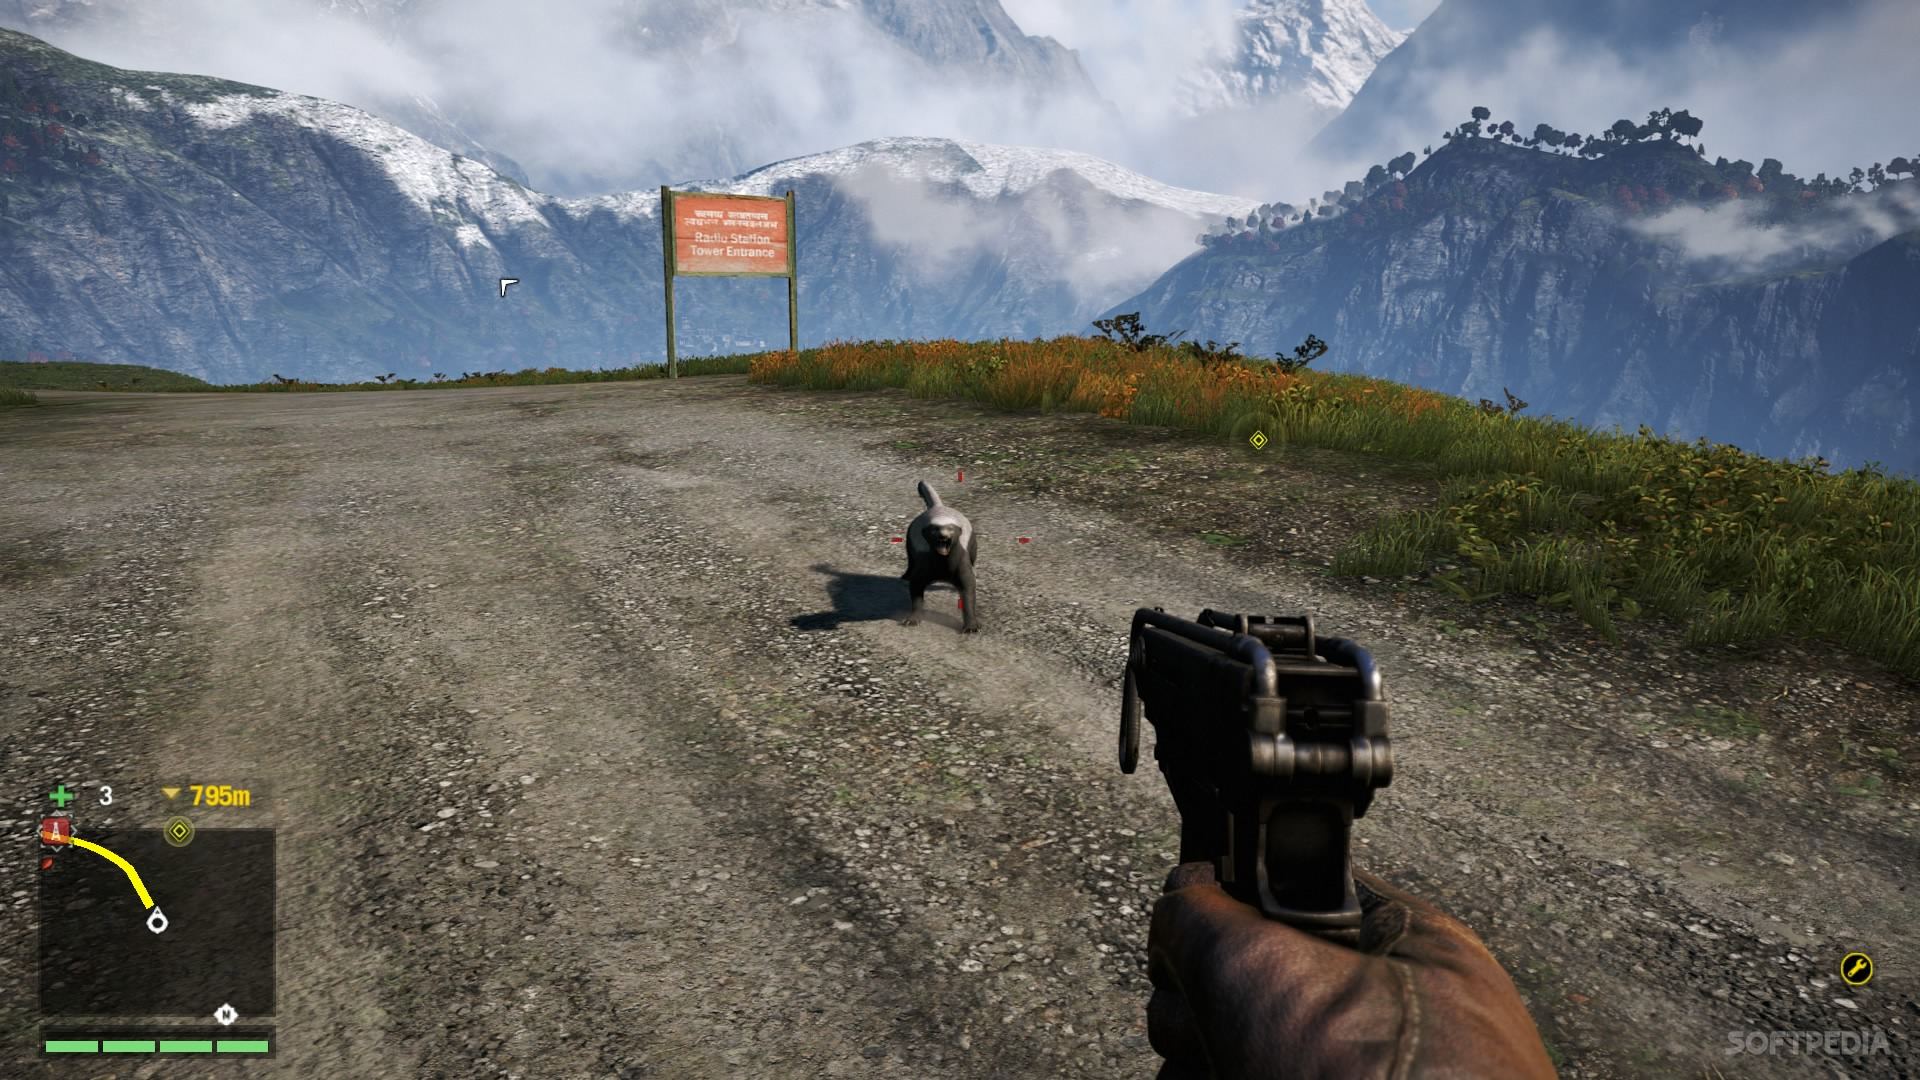 Far Cry 4 Escape from Durgesh Prison DLC